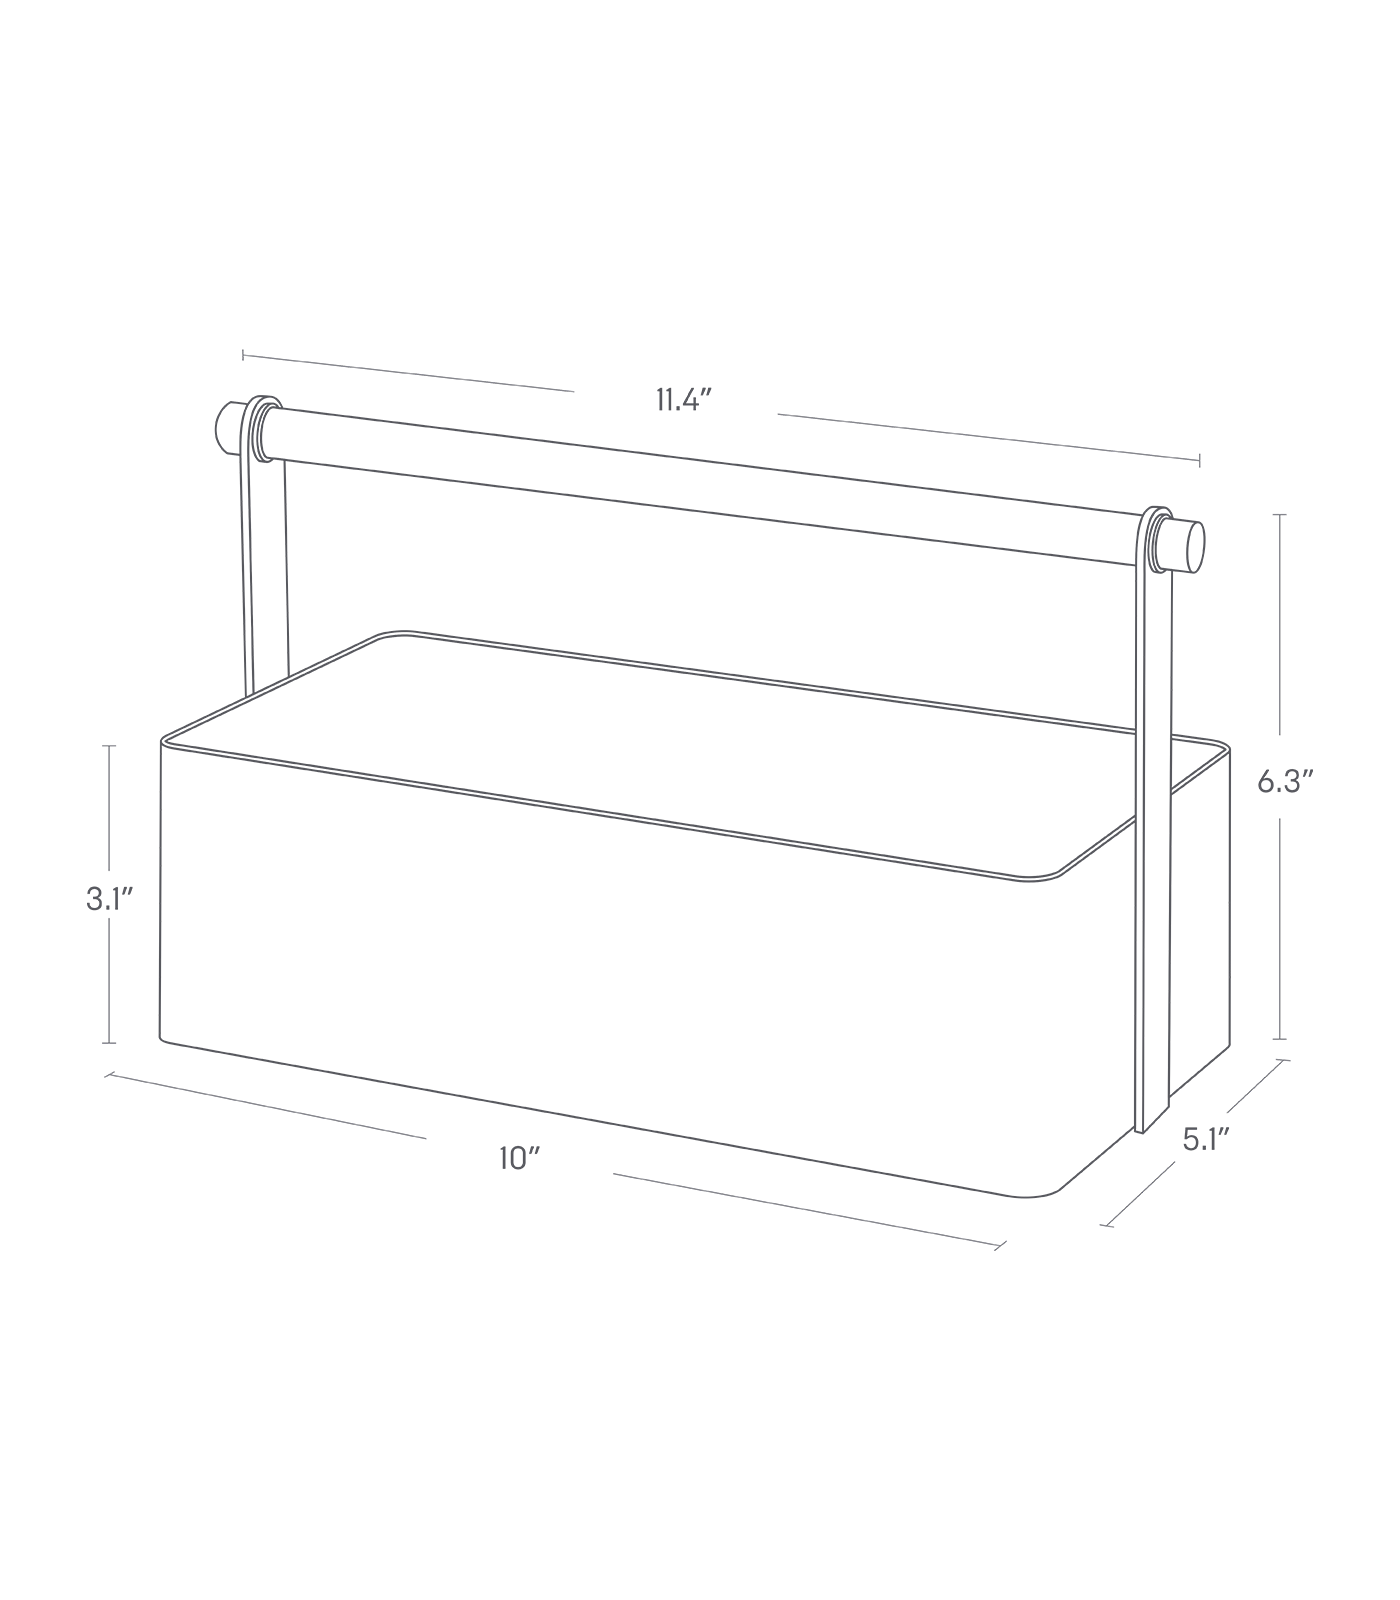 Dimension image of medium Storage Caddy with a caddy width of 10